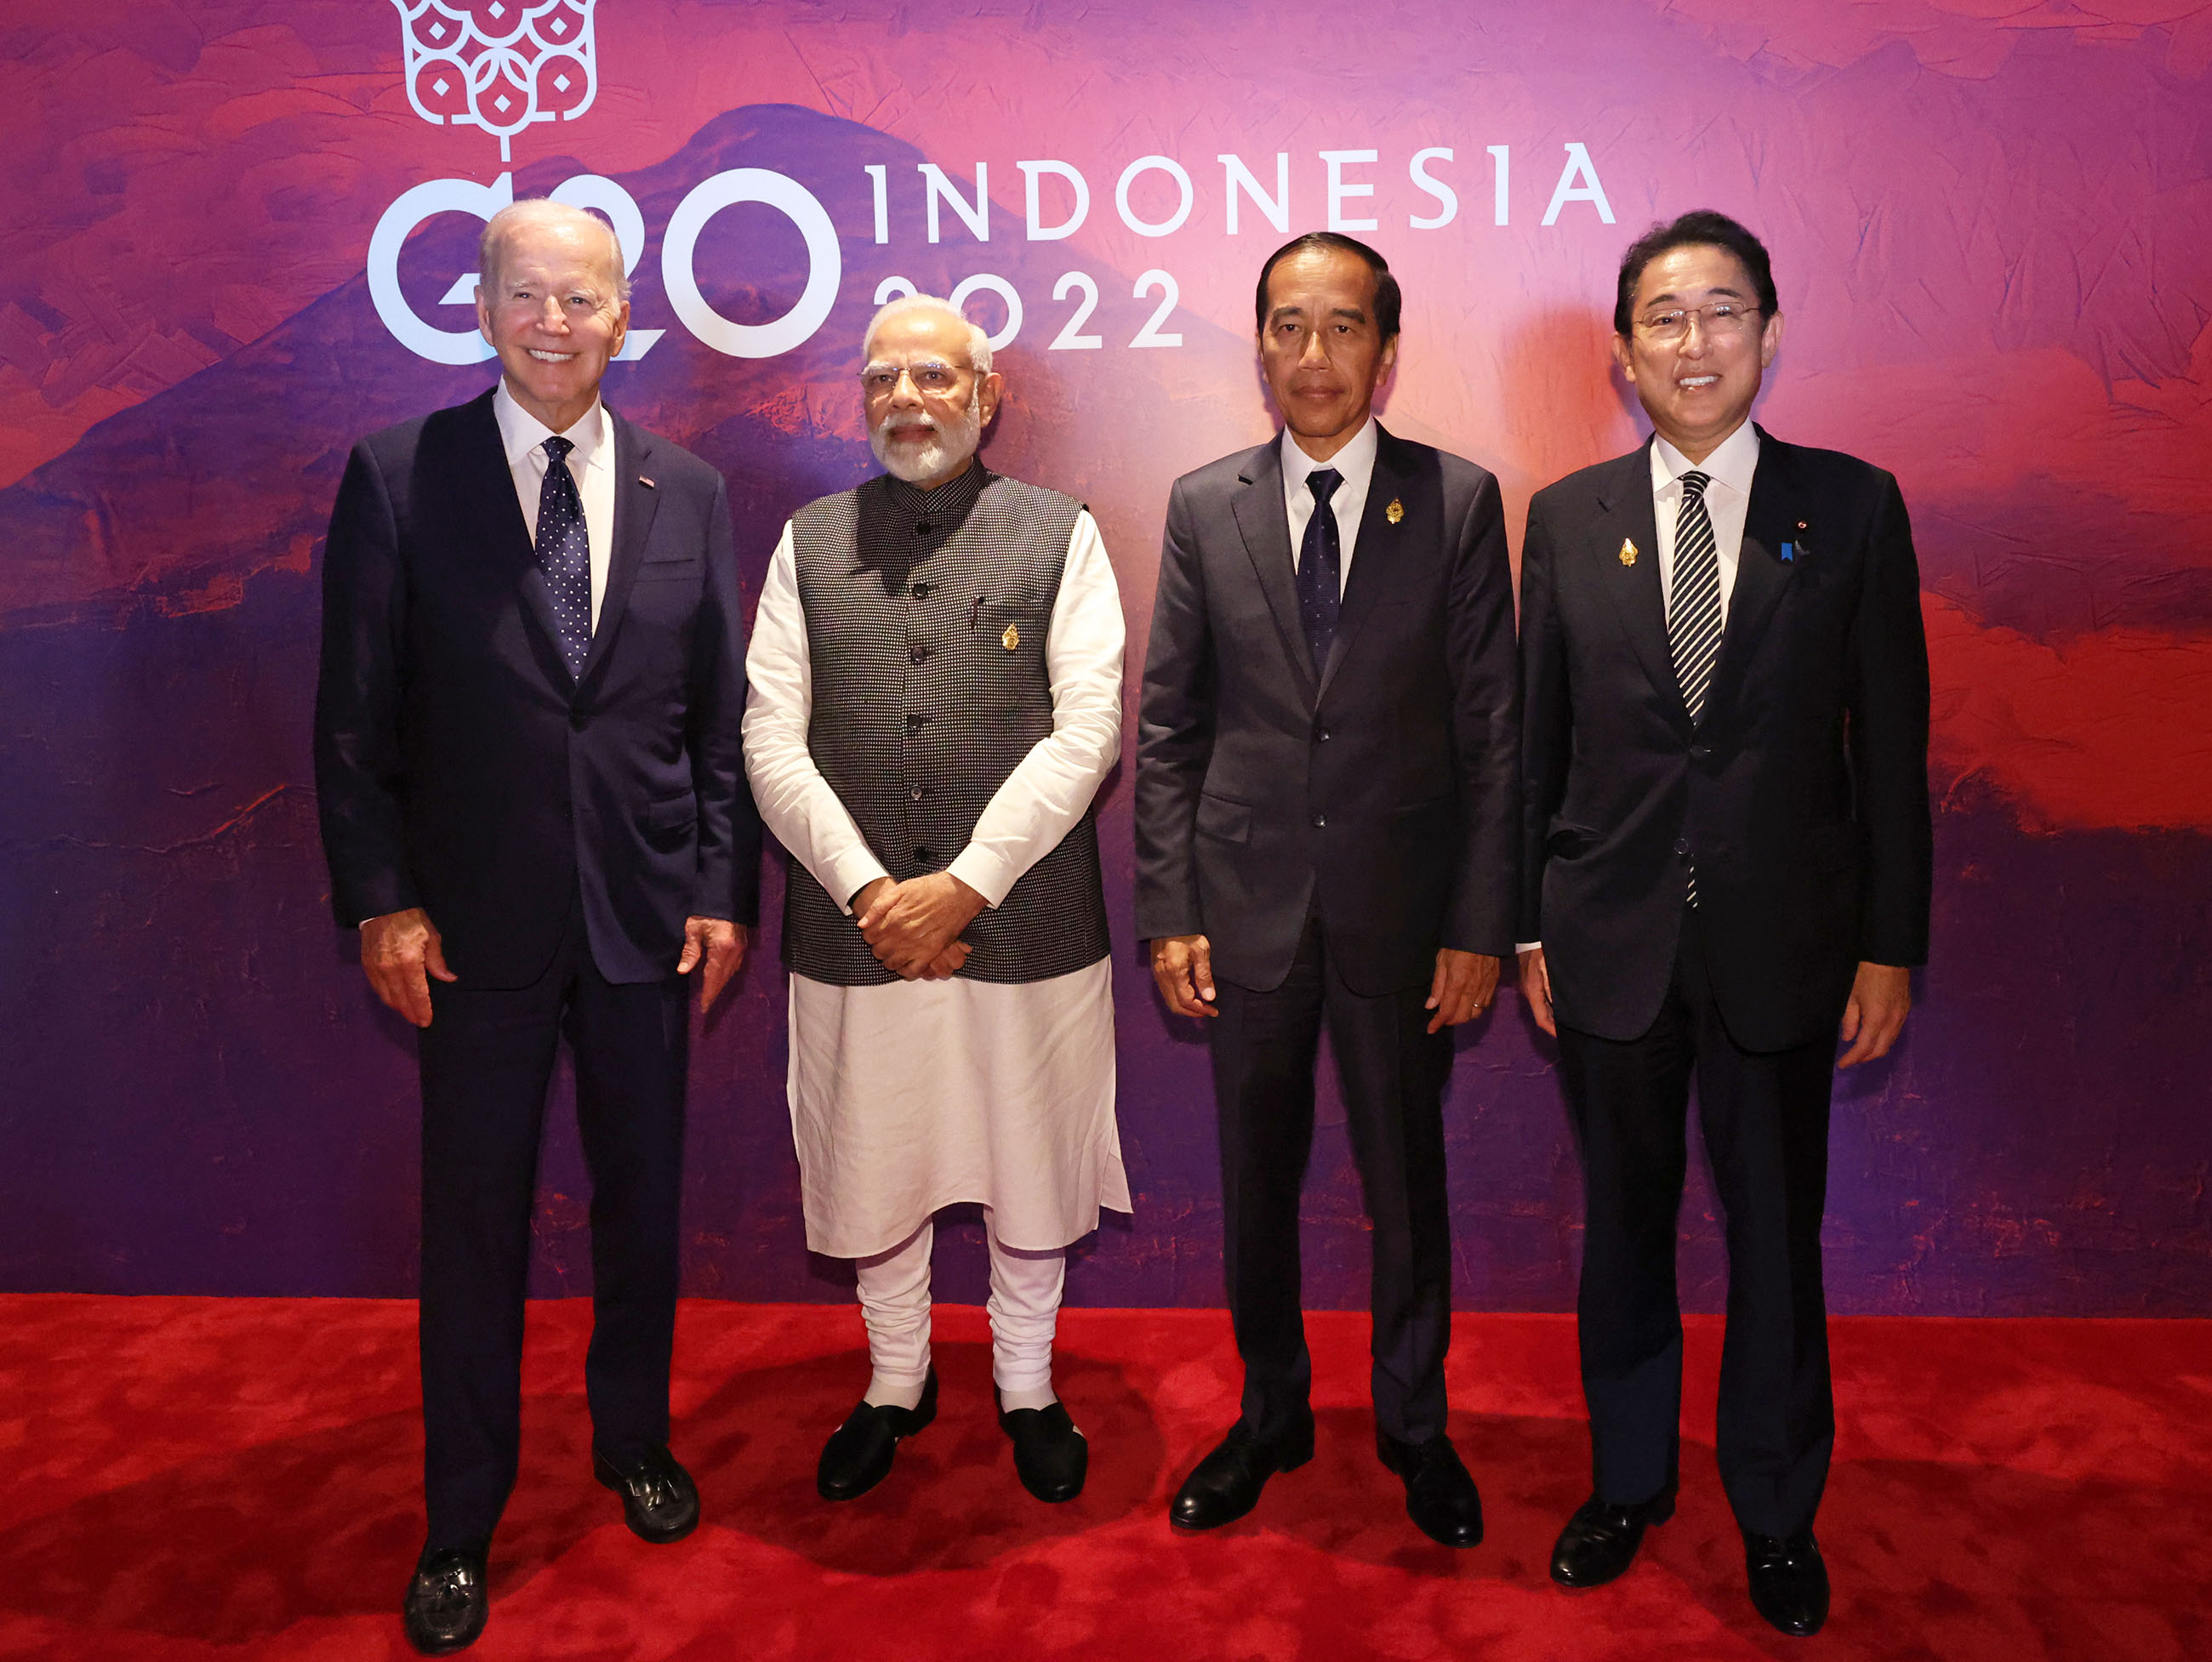 Photo session with President Joe Biden of the U.S., Prime Minister Narendra Modi of India, and President Joko Widodo of Indonesia